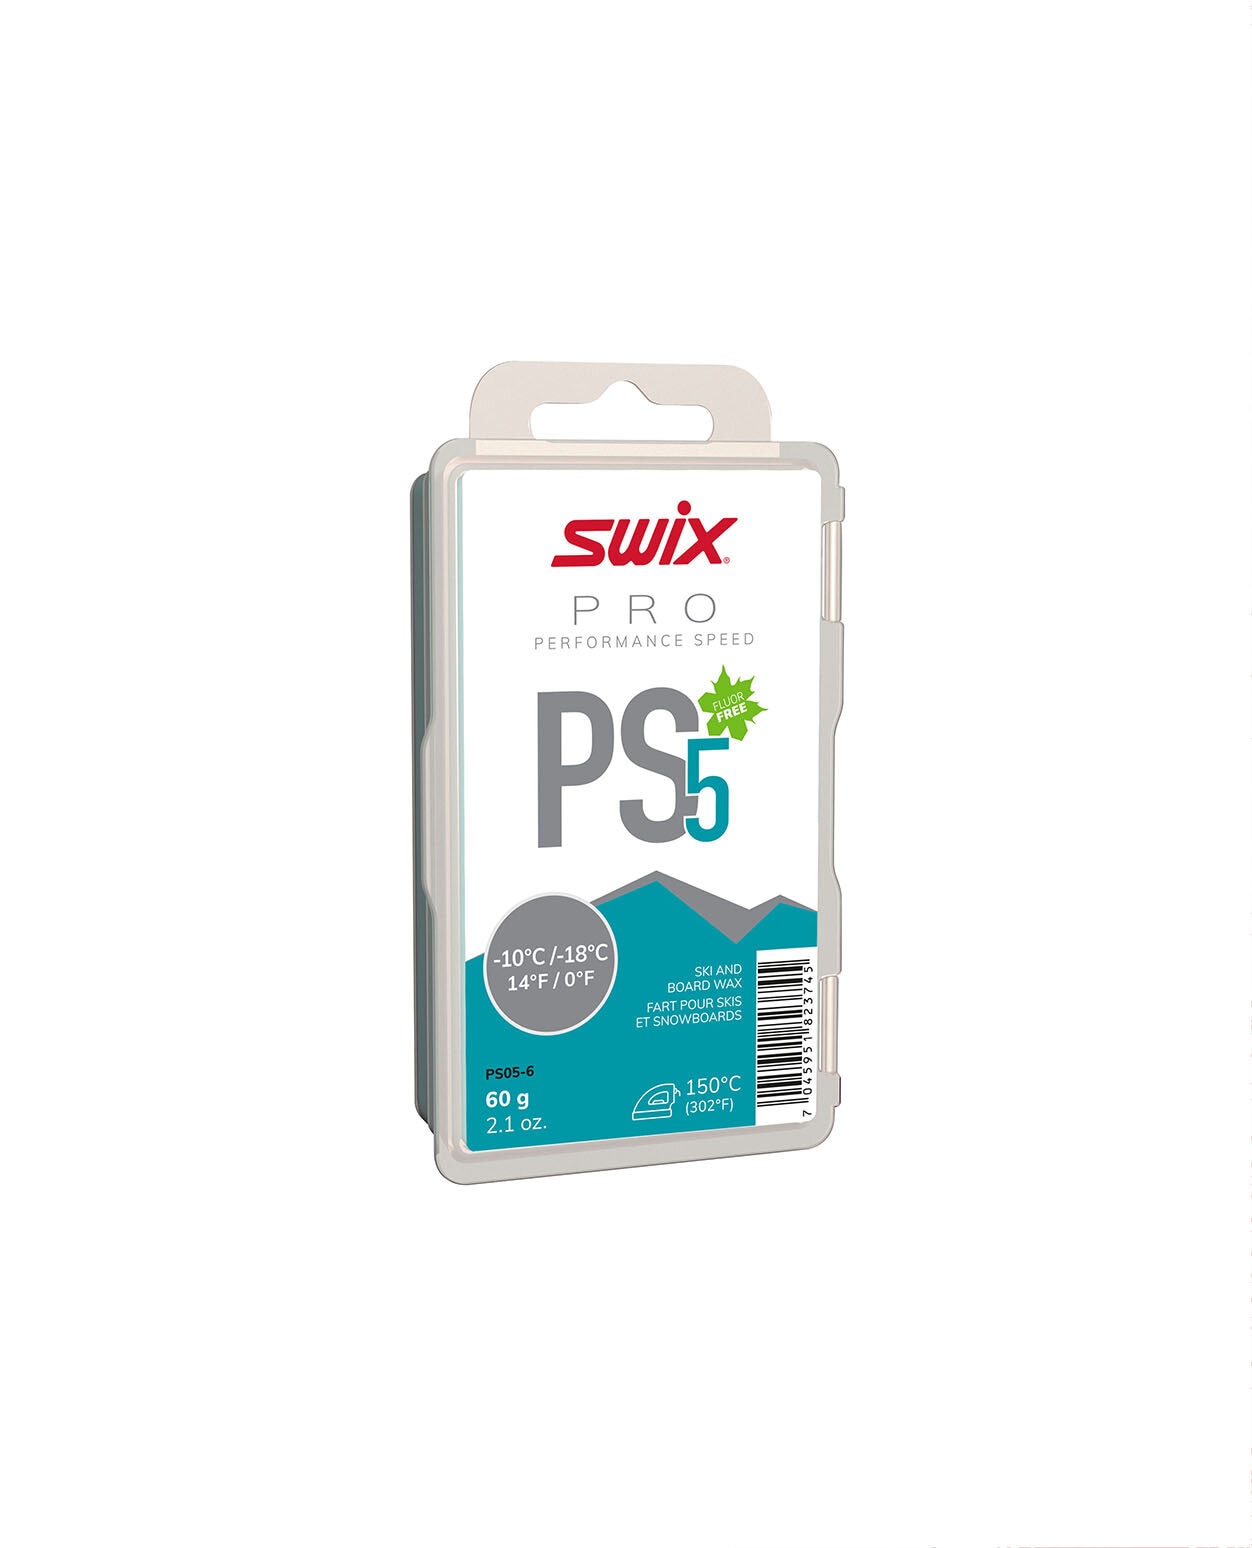 Swix PS5 Turquoise, -10°C/-18°C 60g